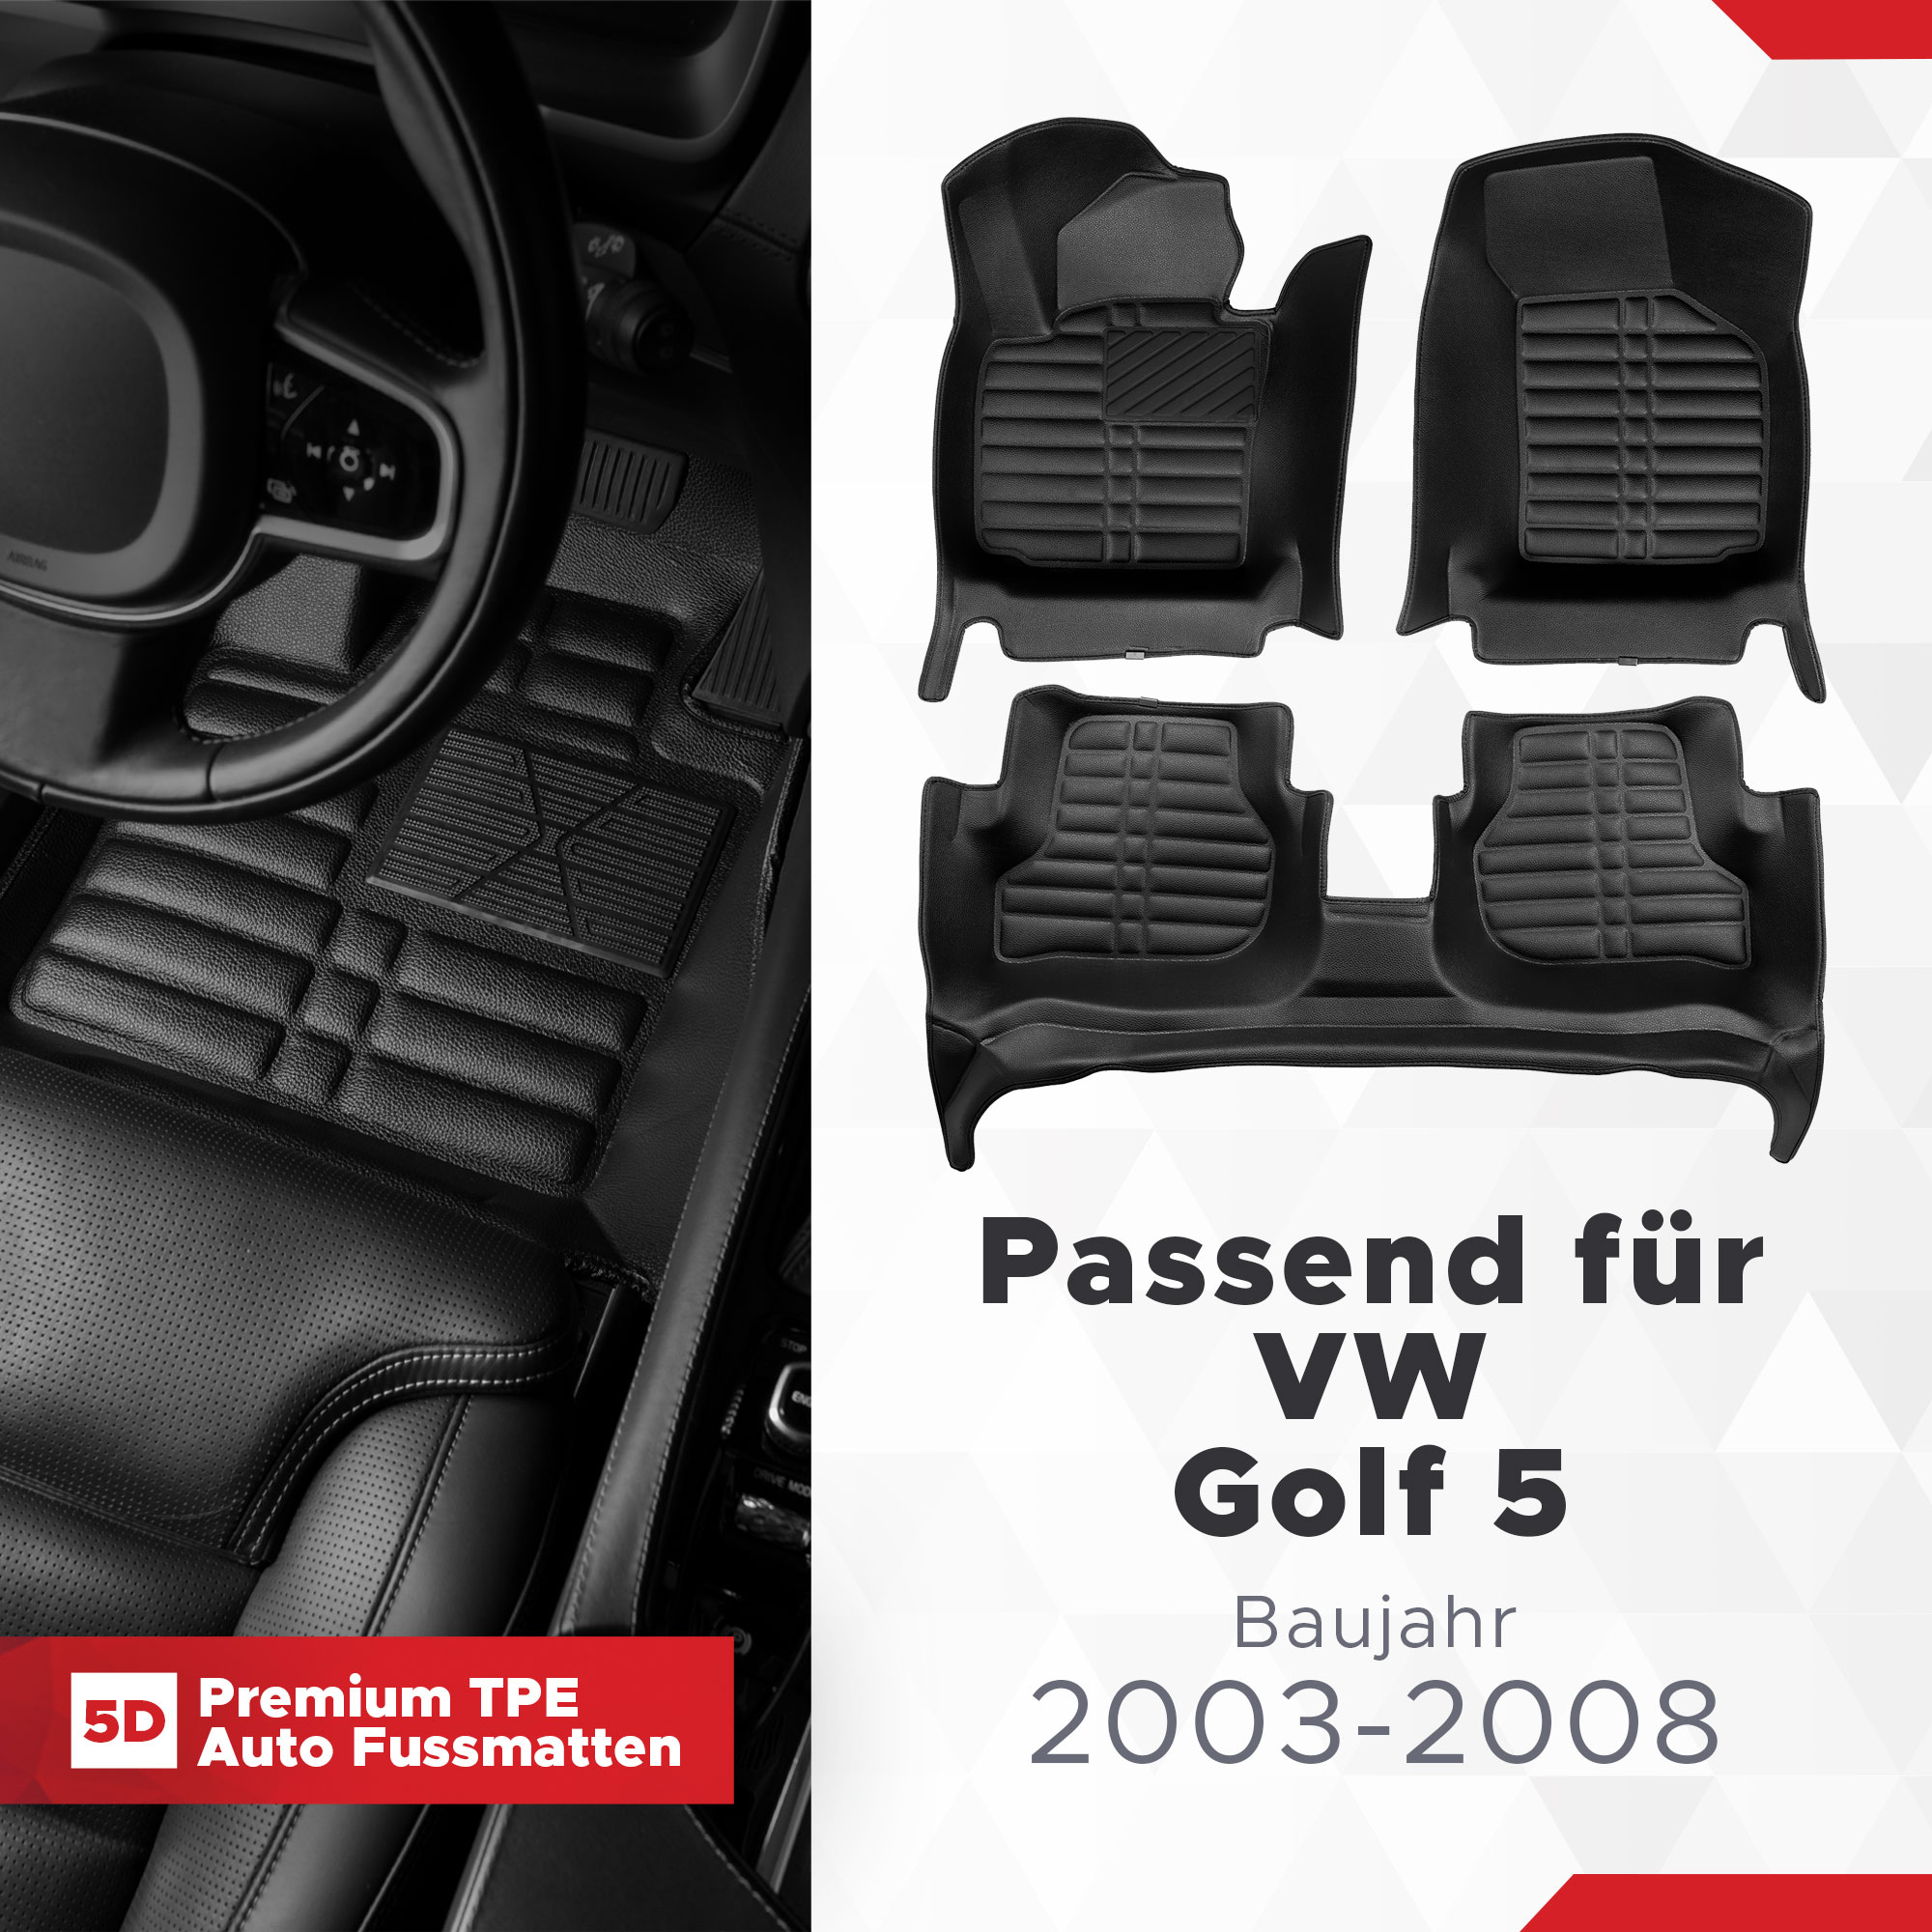 5D Premium Car Floor Mats TPE Set fits VW Golf 5 Year of Construction  2003-2008